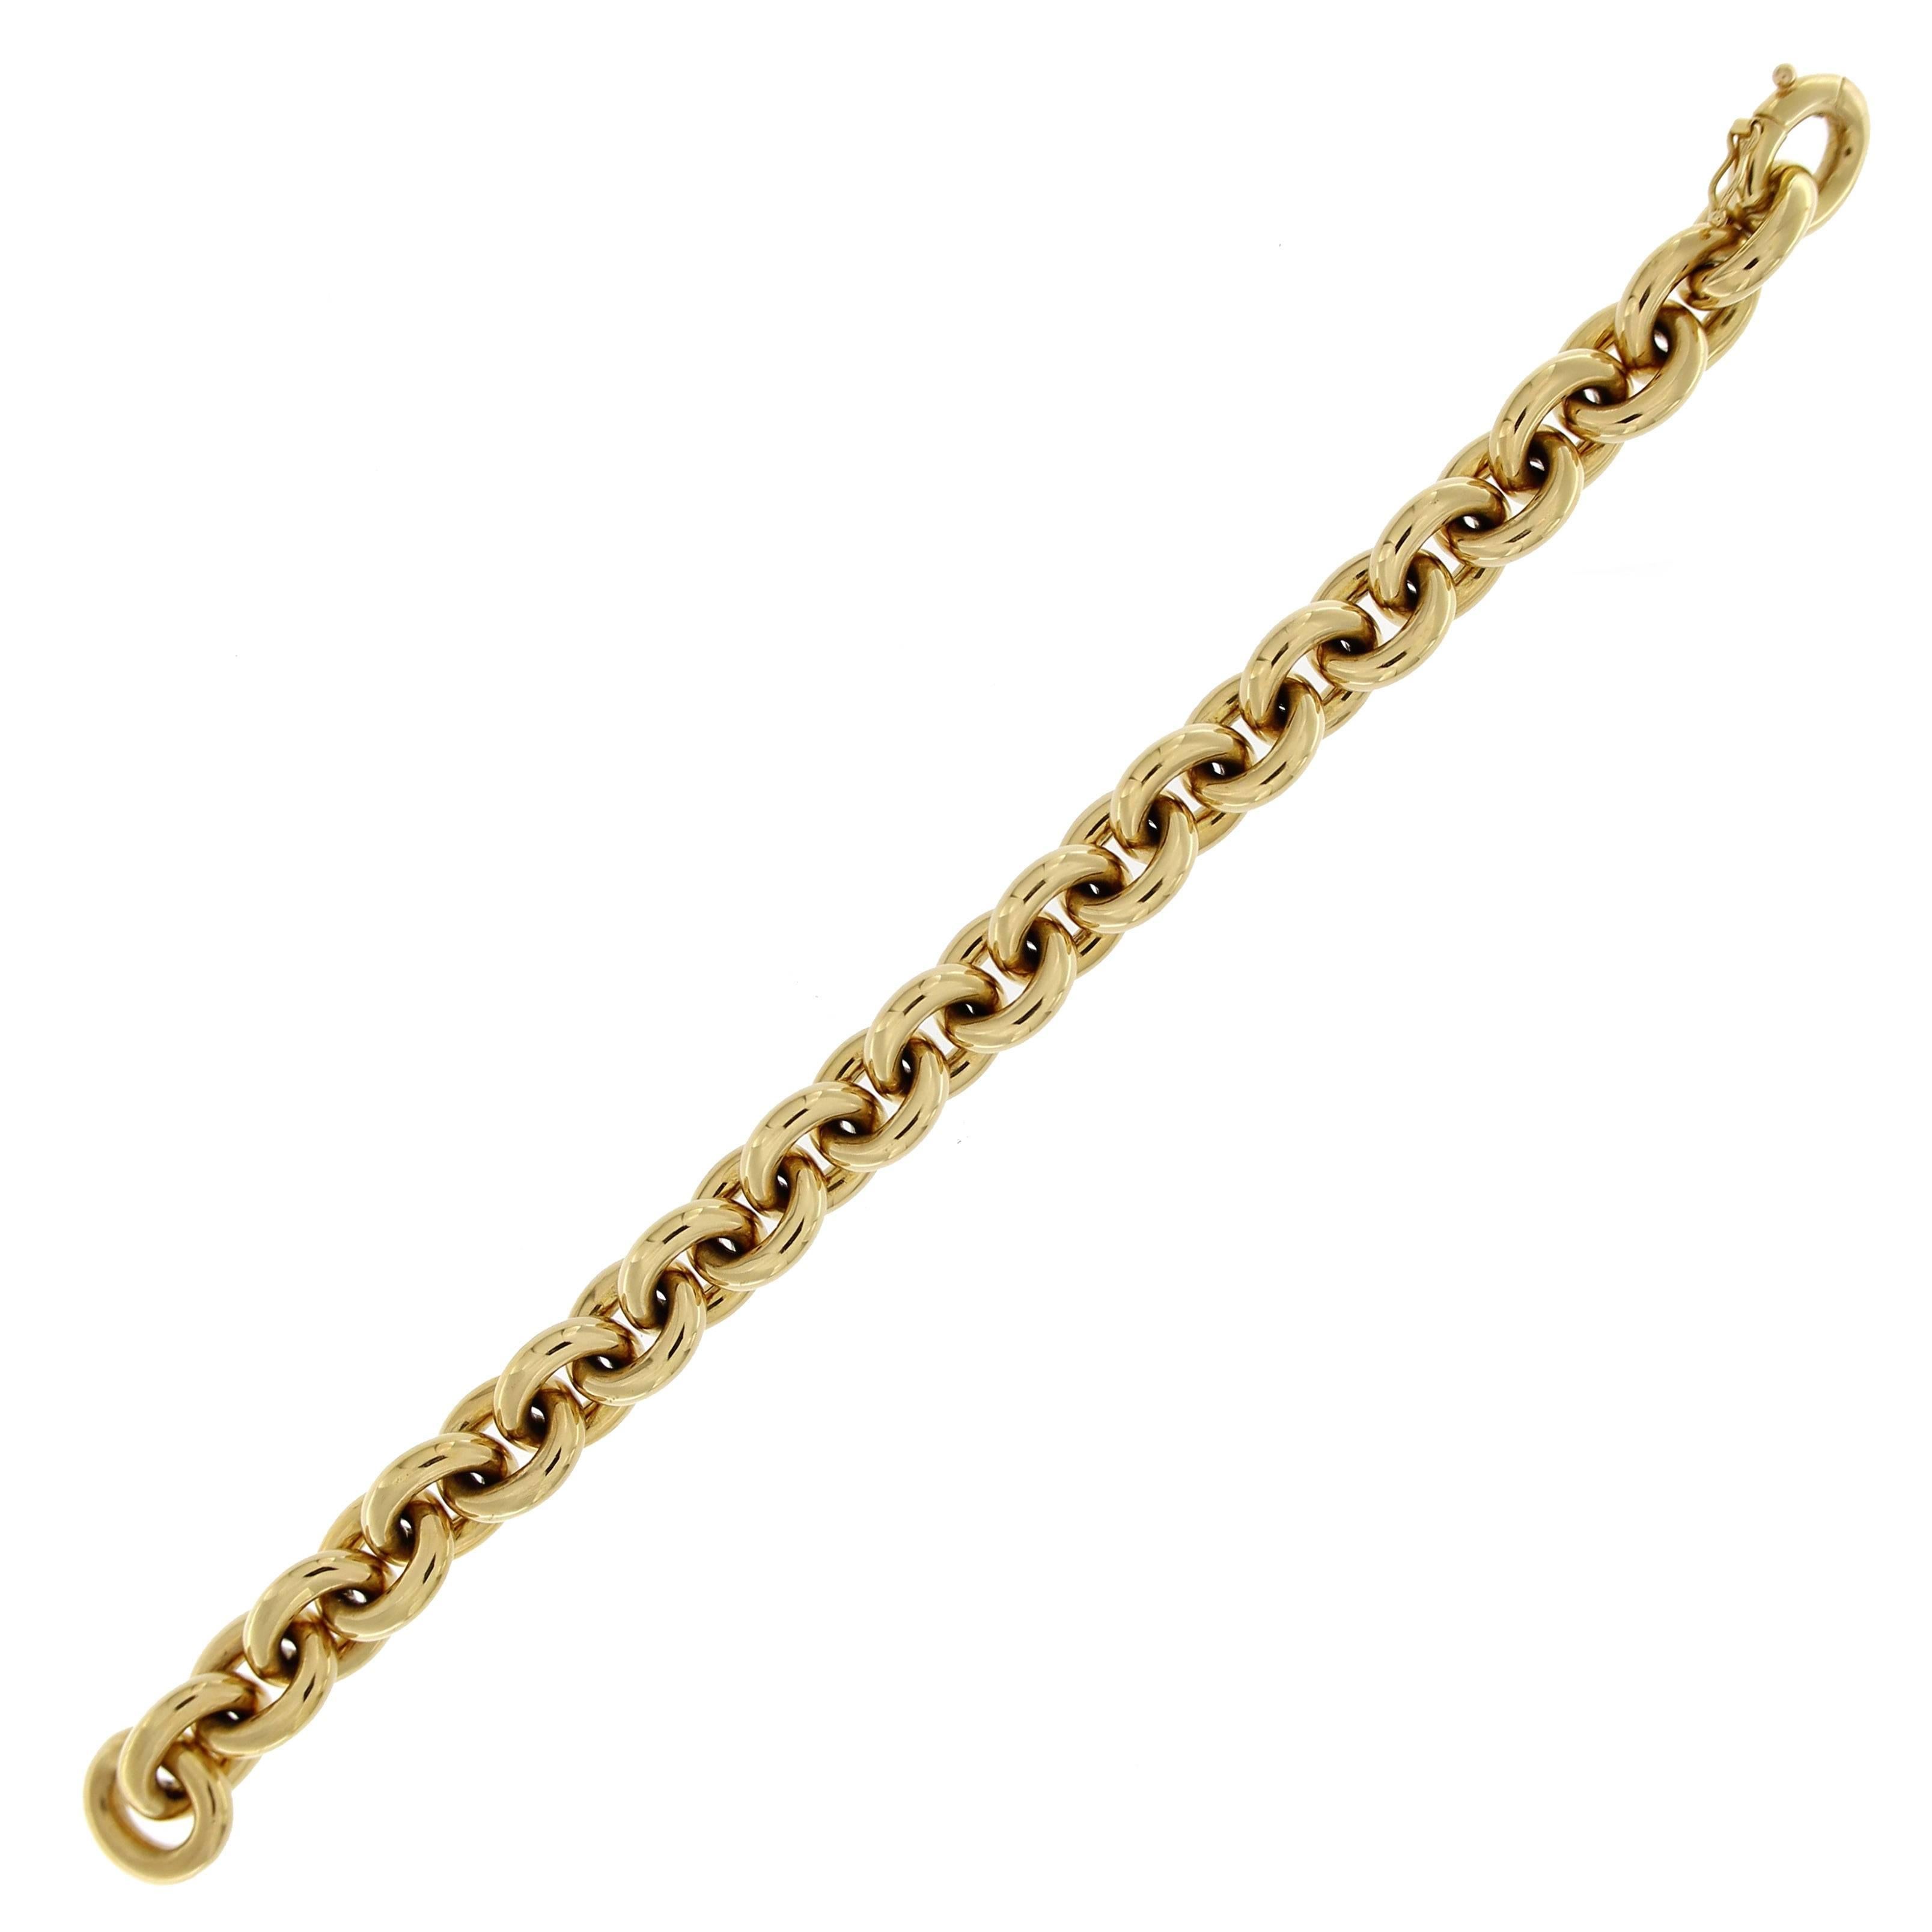 18k gold hand chain